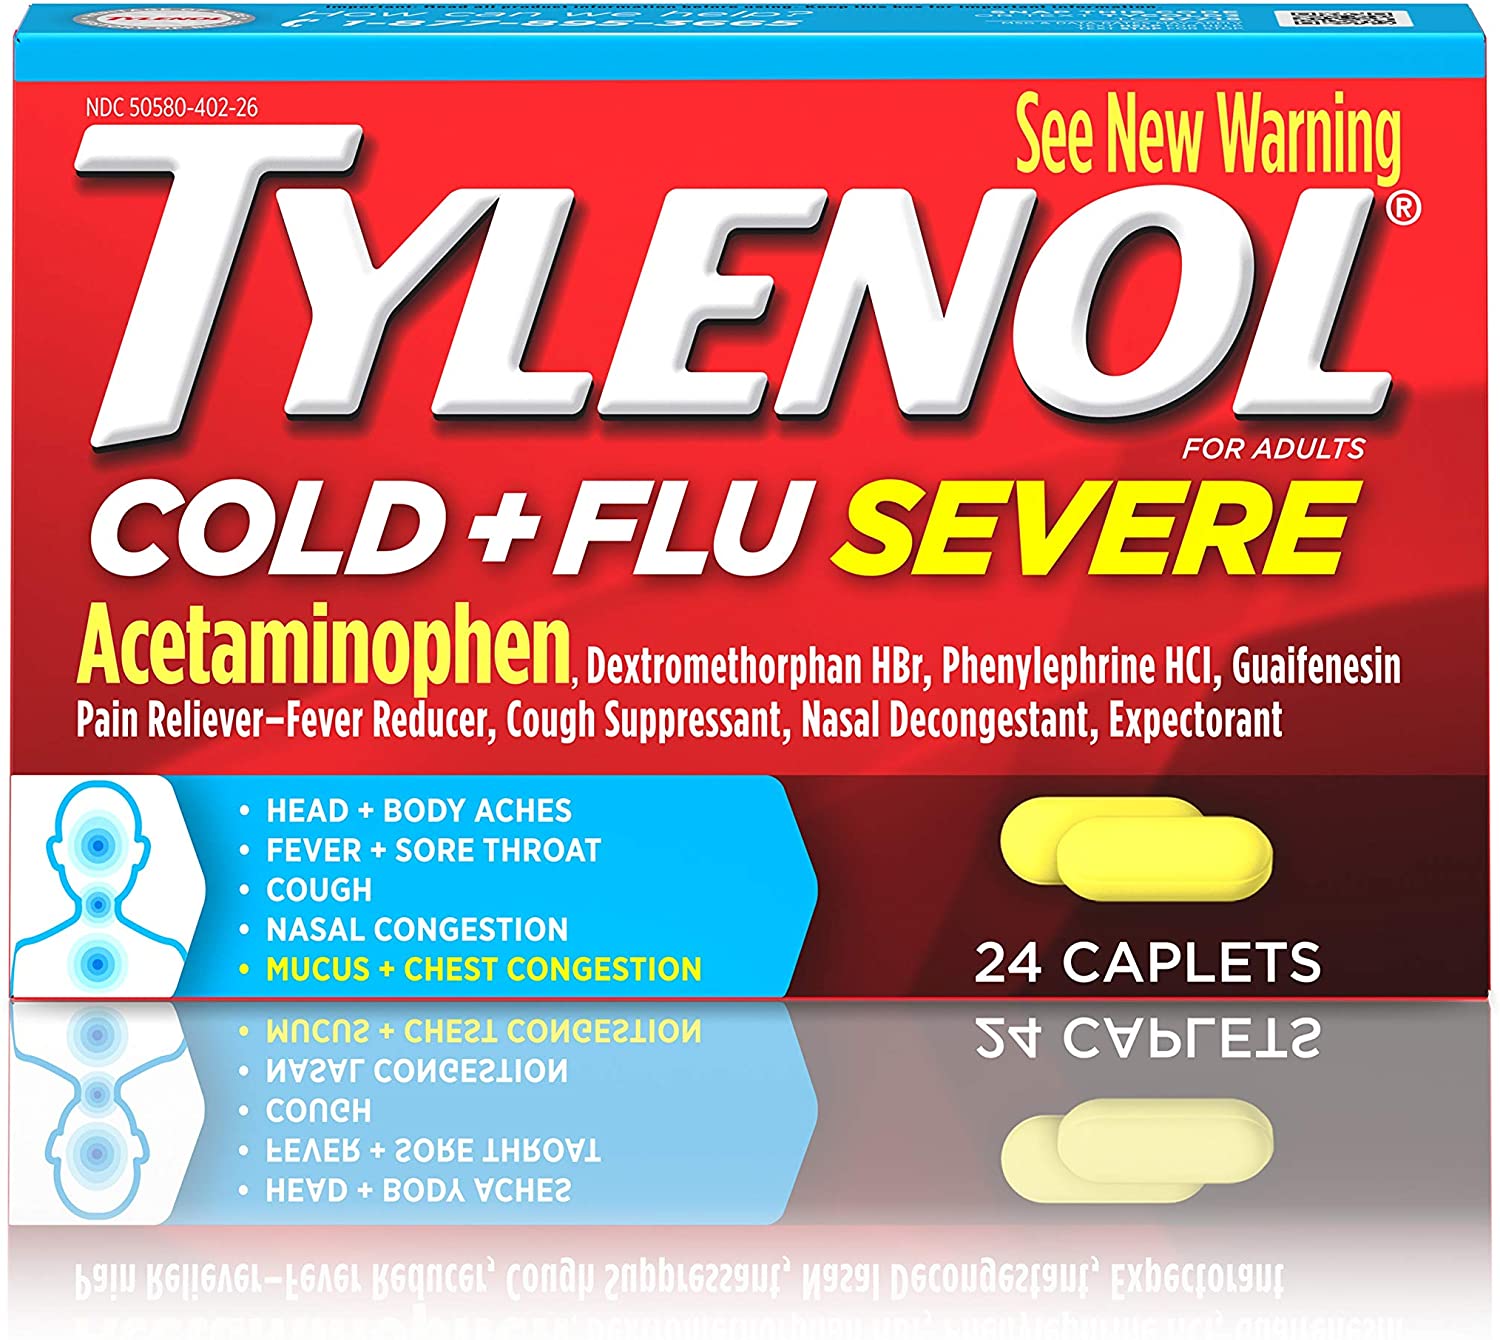 Free Full-Sized Tylenol Product